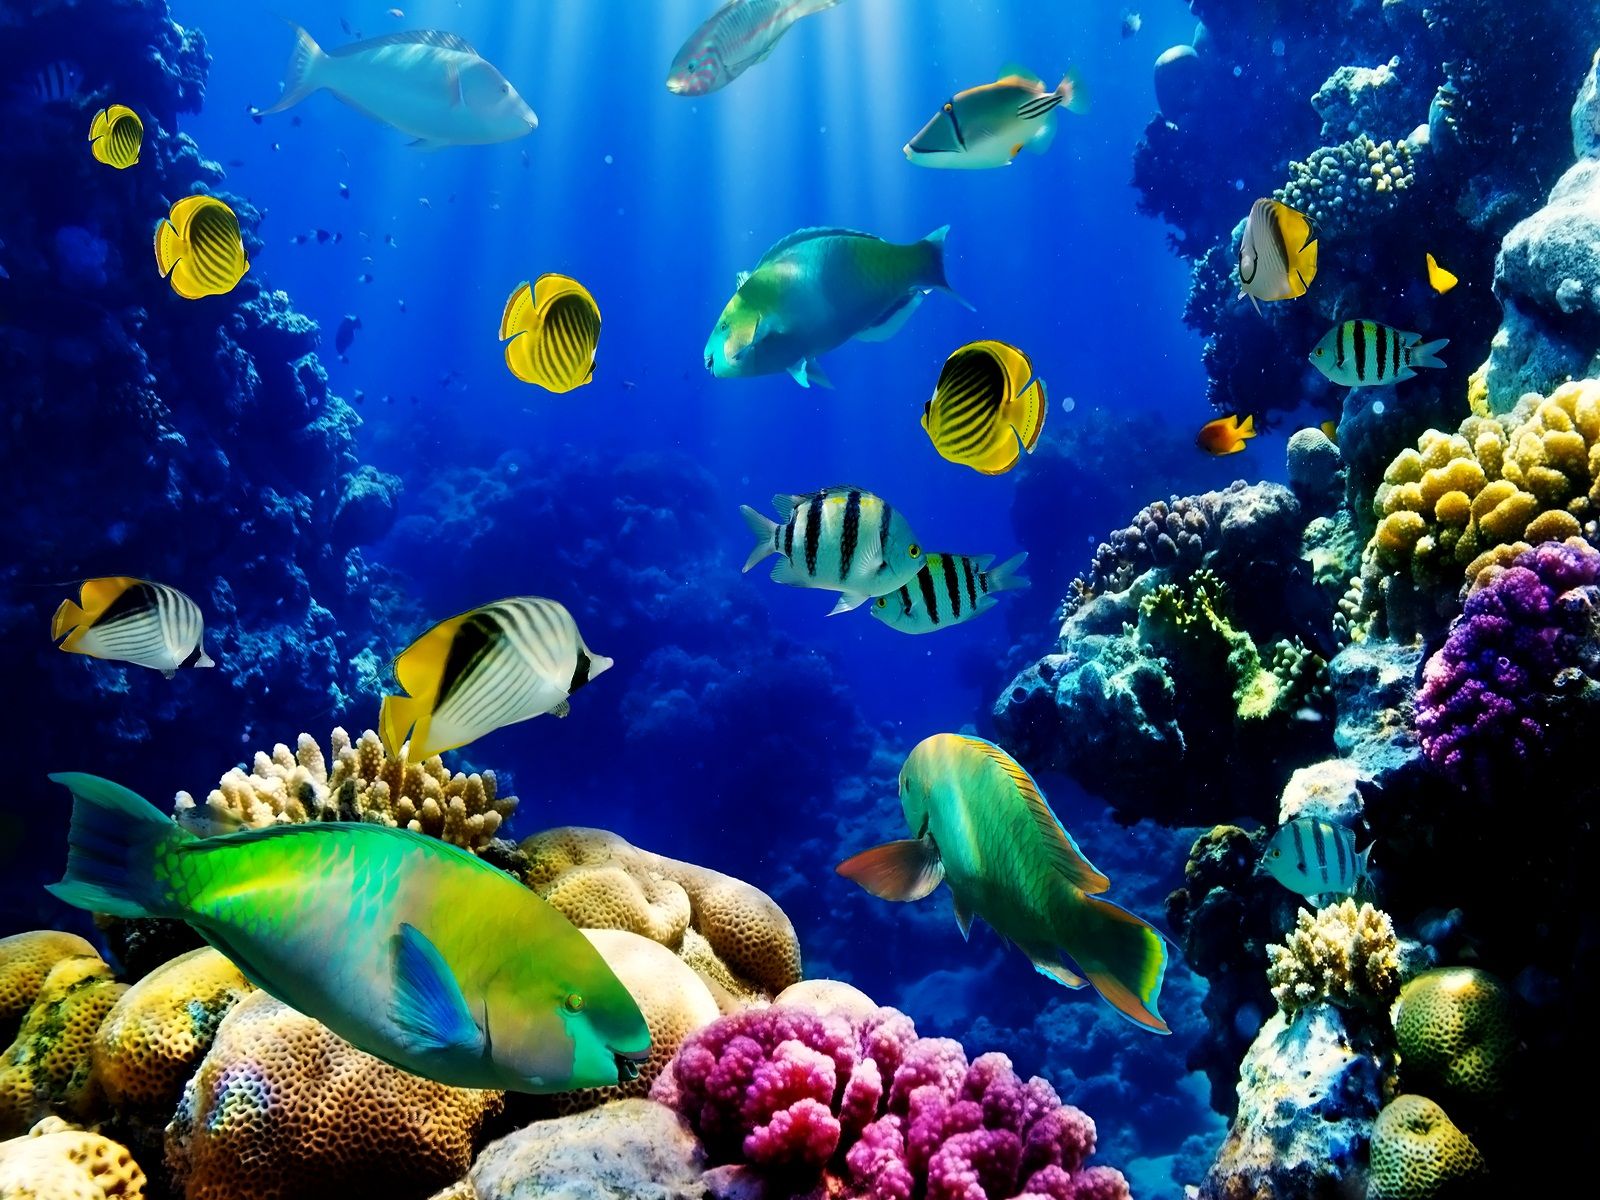 Hd Fish Tank Live Wallpaper Dowload Data-src /img/98667 - Live Aquarium  Wallpaper Hd - 1600x1200 Wallpaper 